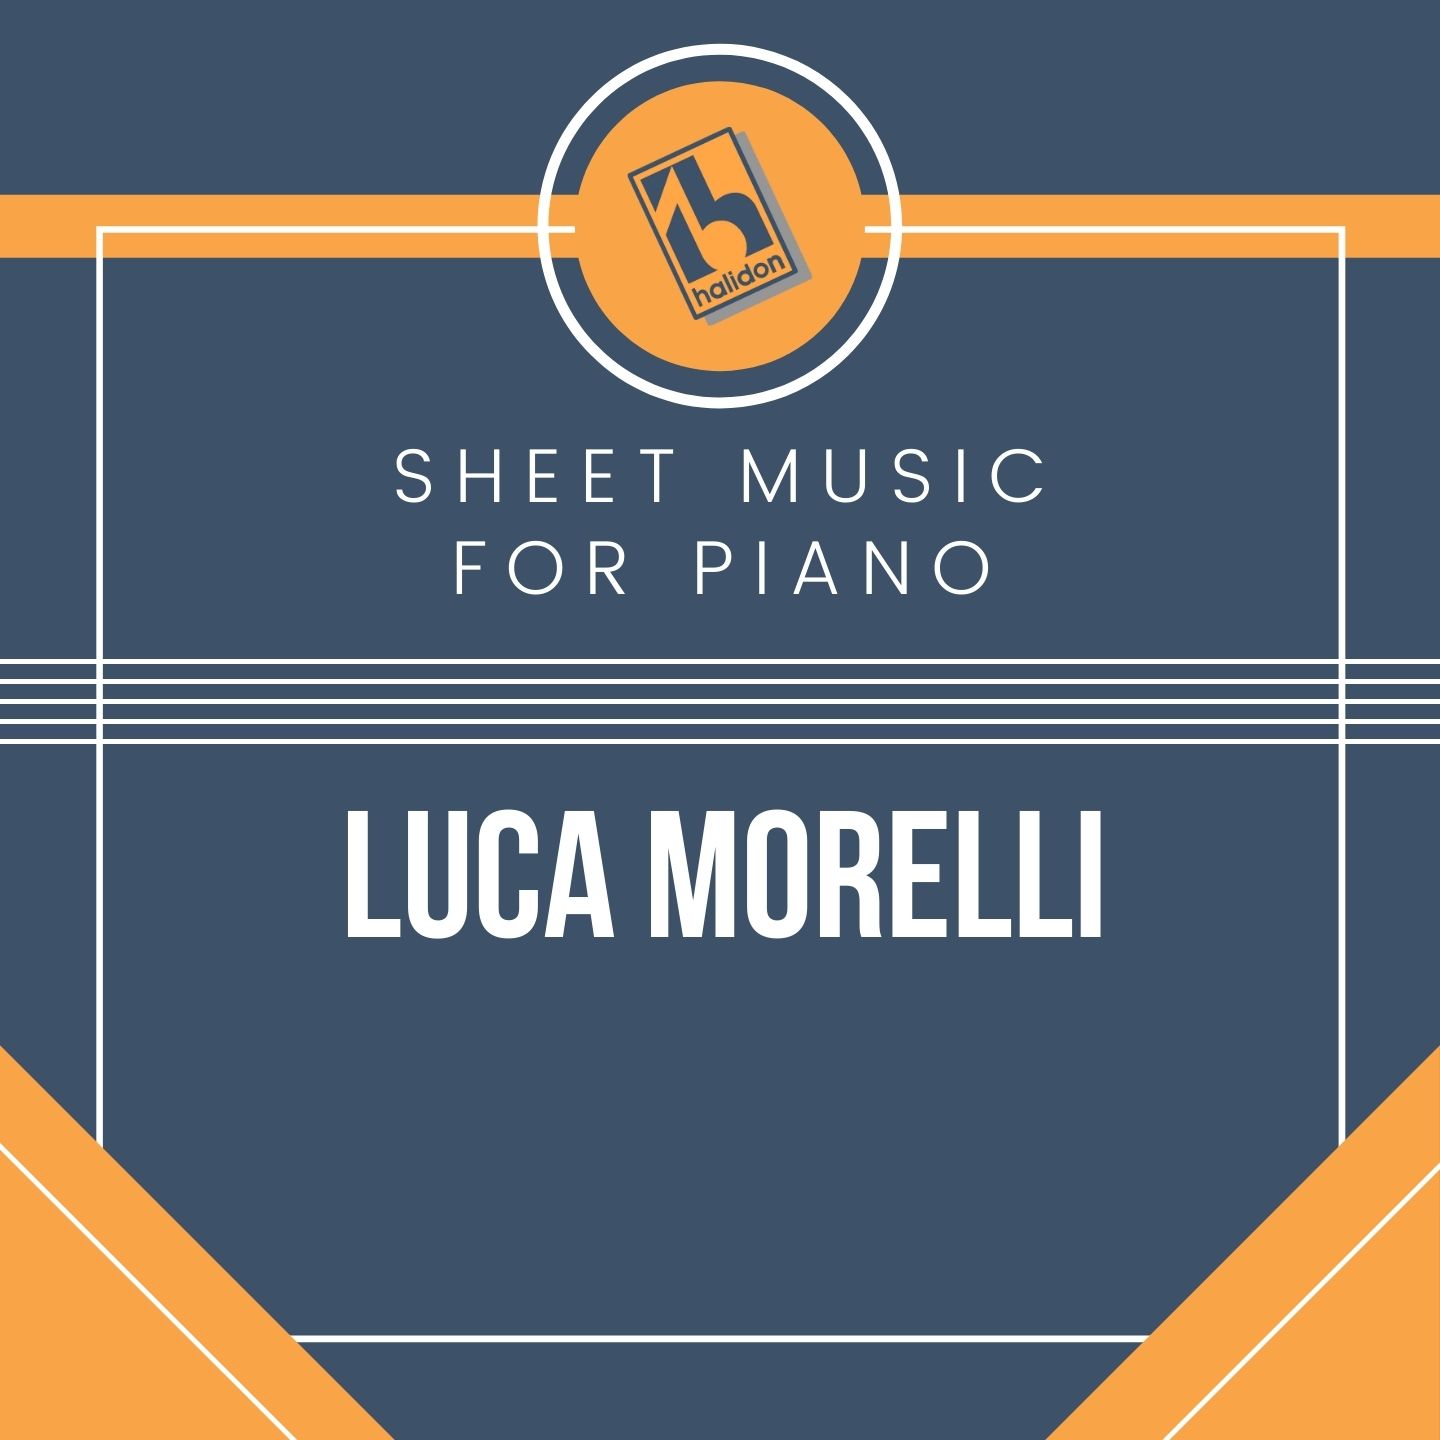 Luca Morelli - Piano Sheet Music